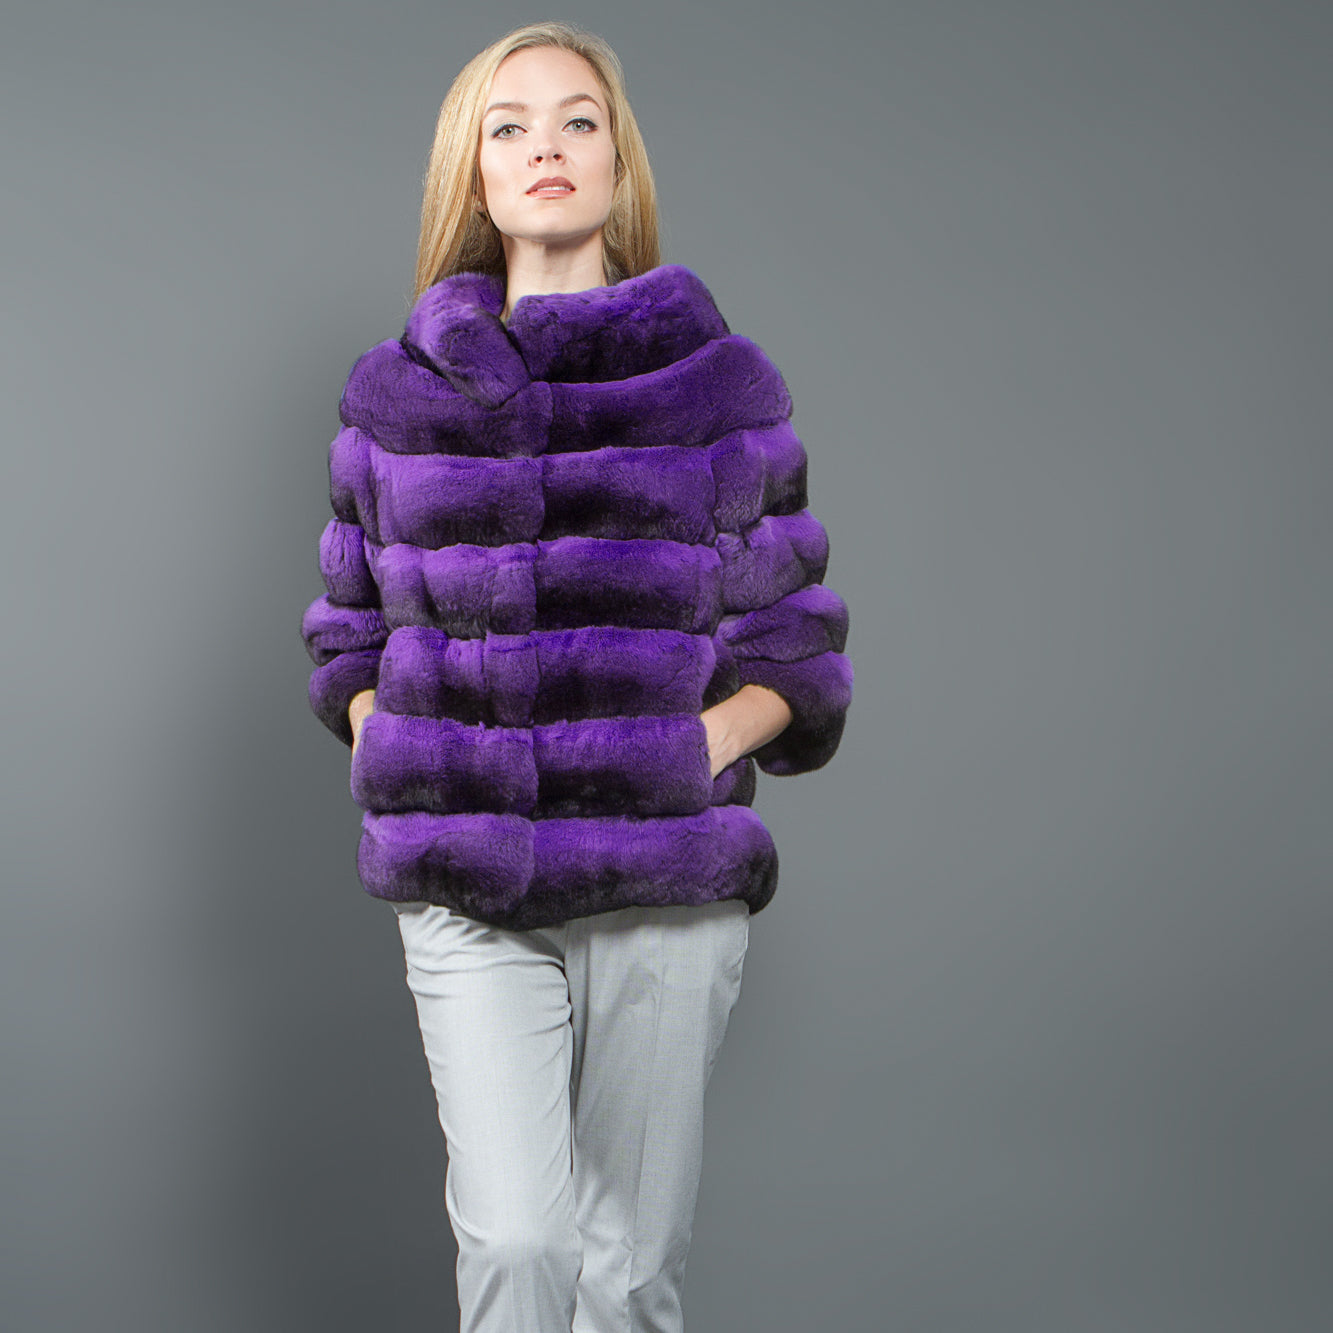 Violet Chinchilla Fur Jacket for women – Fur Caravan